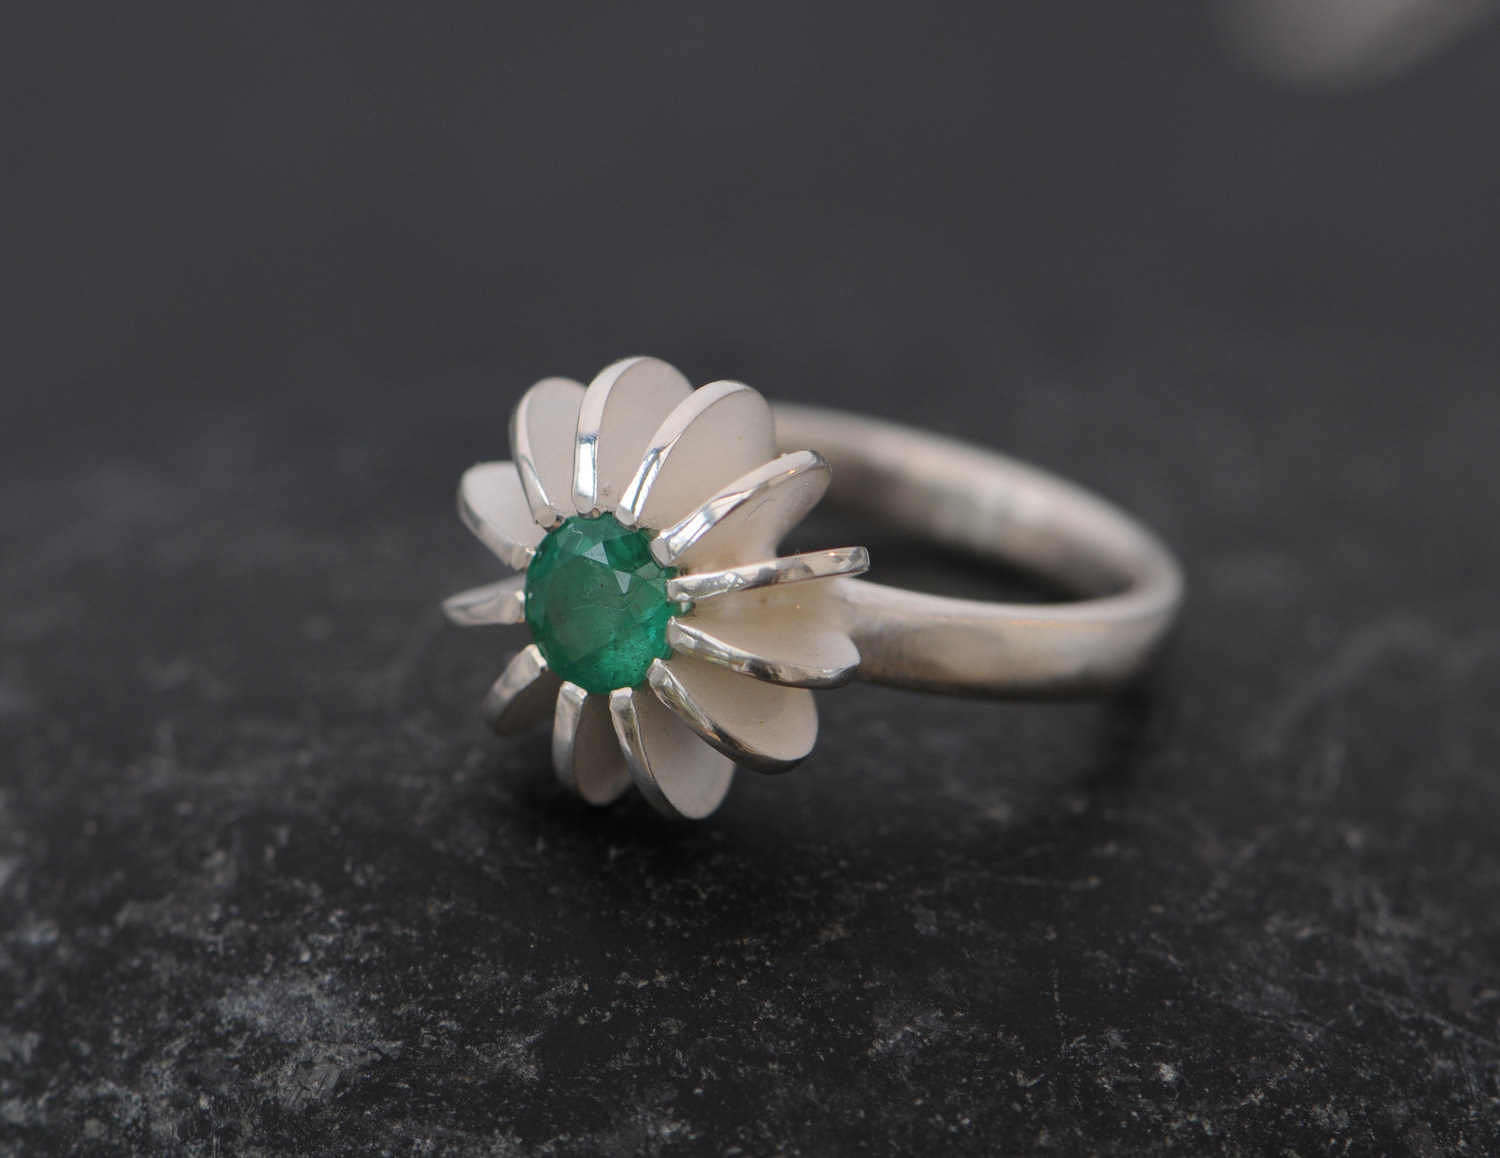 Green emerald sea urchin ring in silver